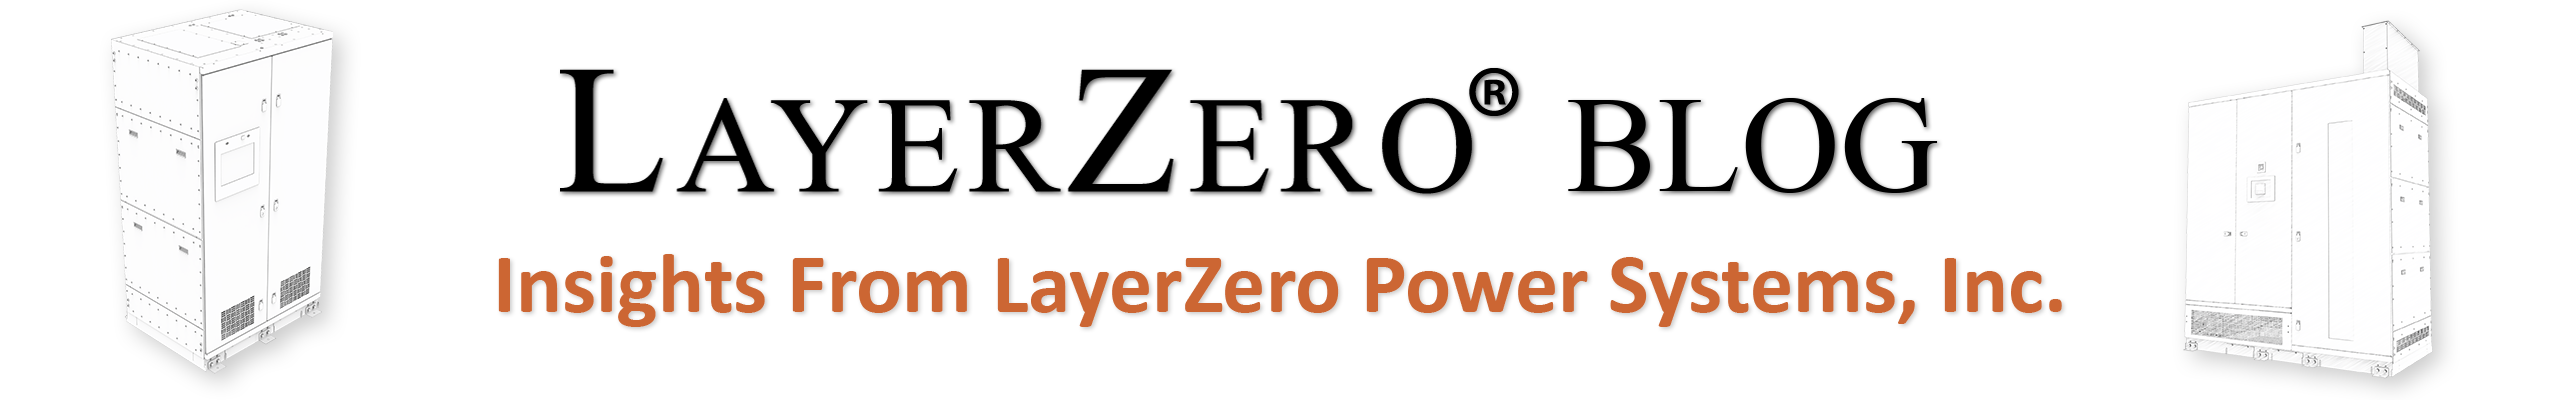 LayerZero Blog - LayerZero Power Systems Blog